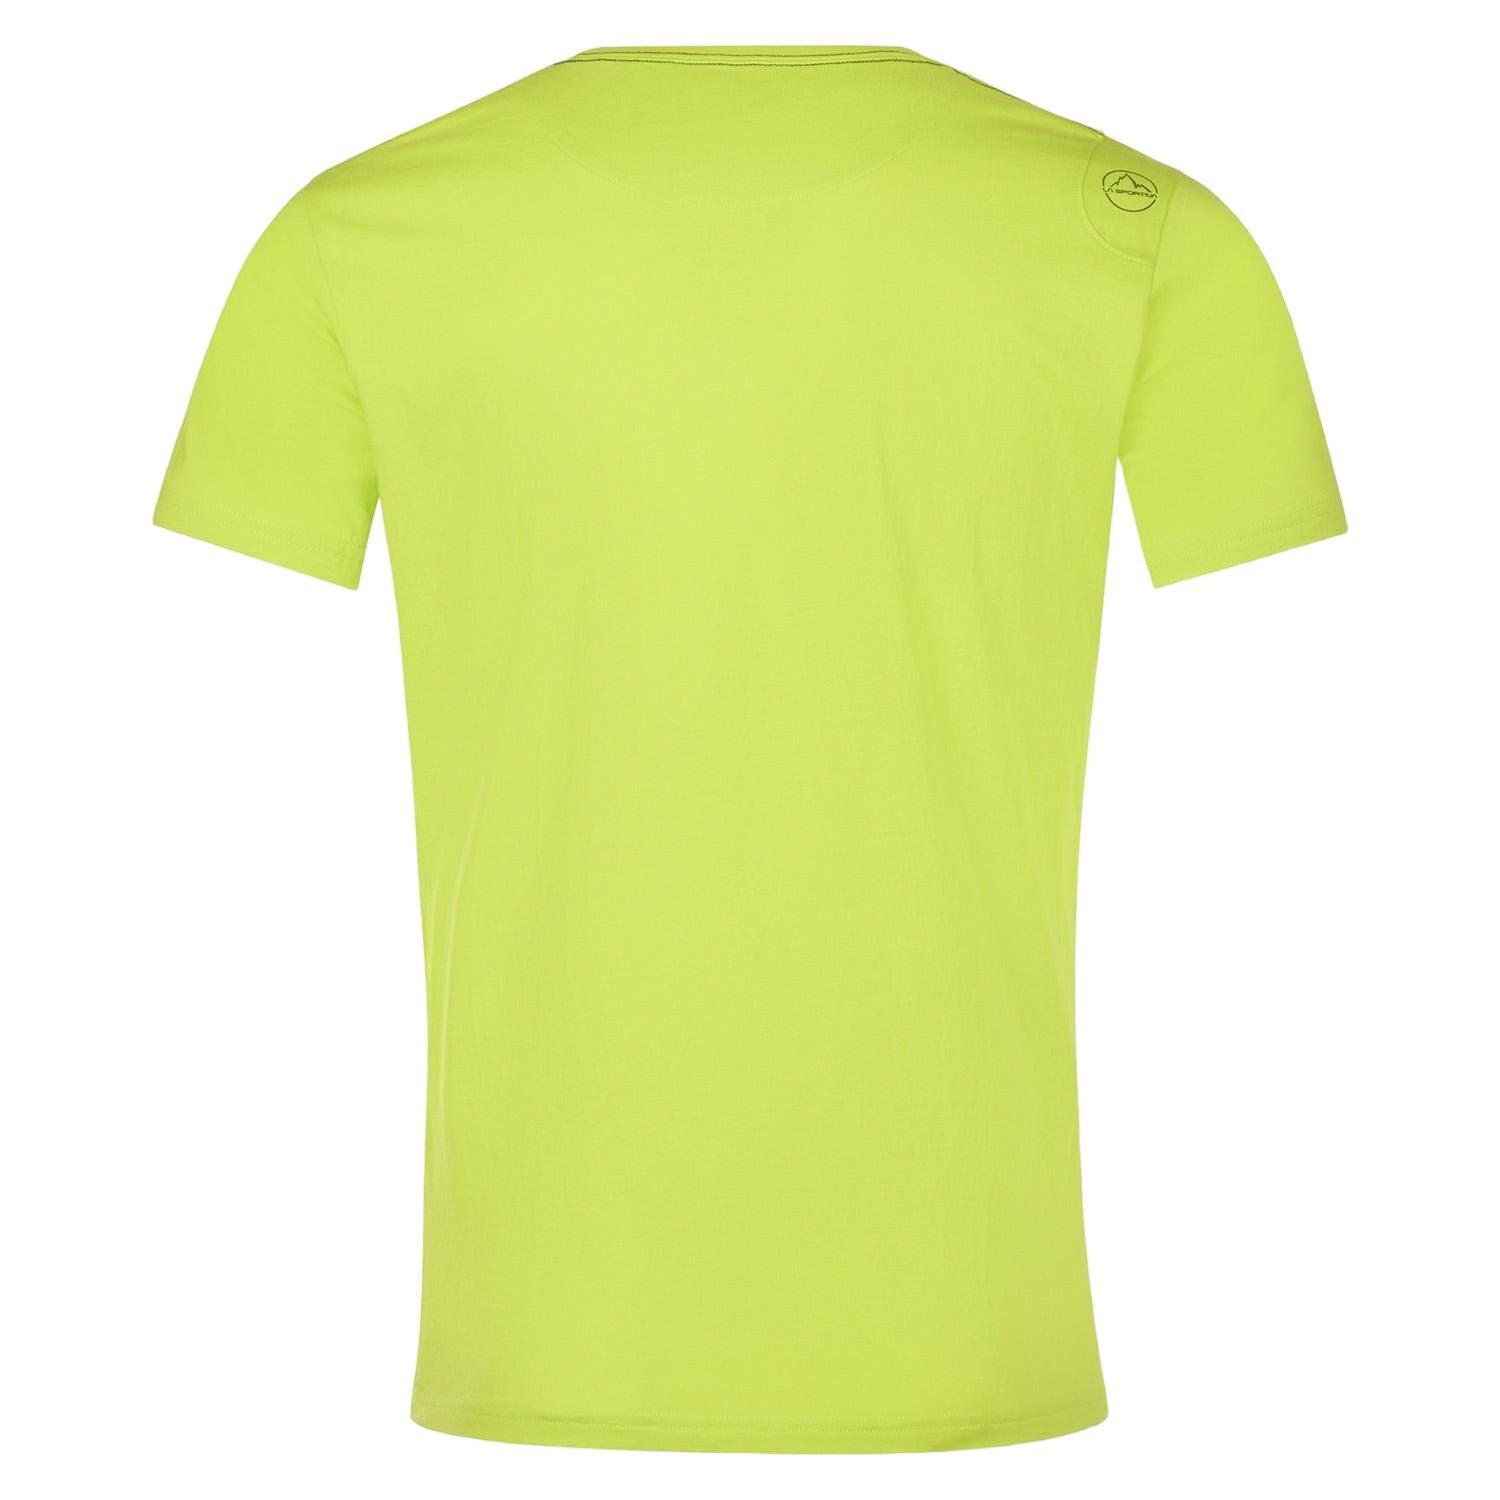 La Sportiva | T-shirt Van Uomo Lime Punch - Fabbrica Ski Sises